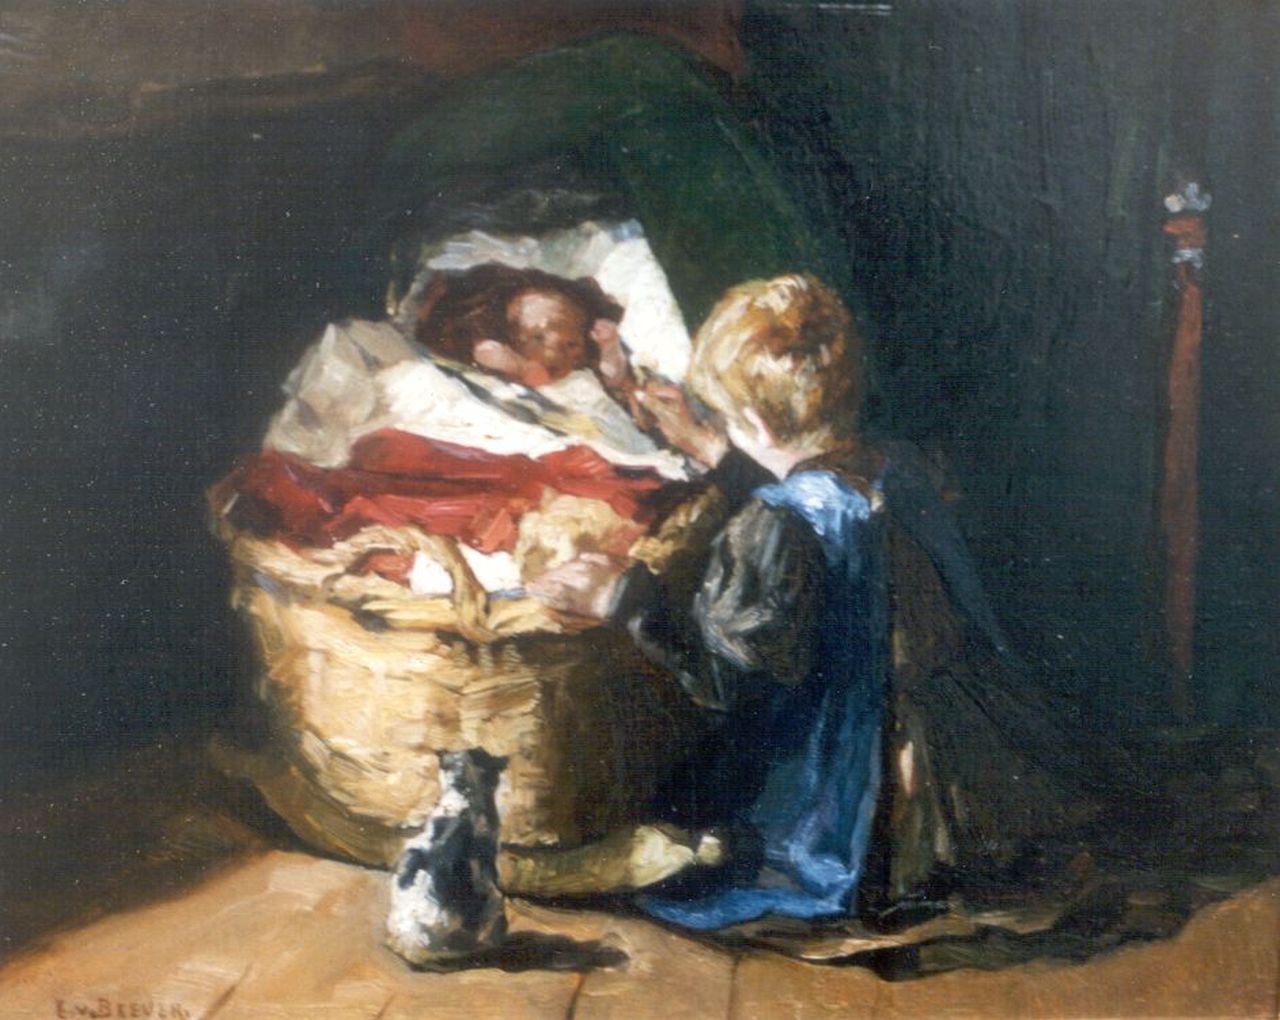 Beever E.S. van | 'Emanuël' Samson van Beever, The new baby, Öl auf Holz 25,0 x 31,5 cm, signed l.l.